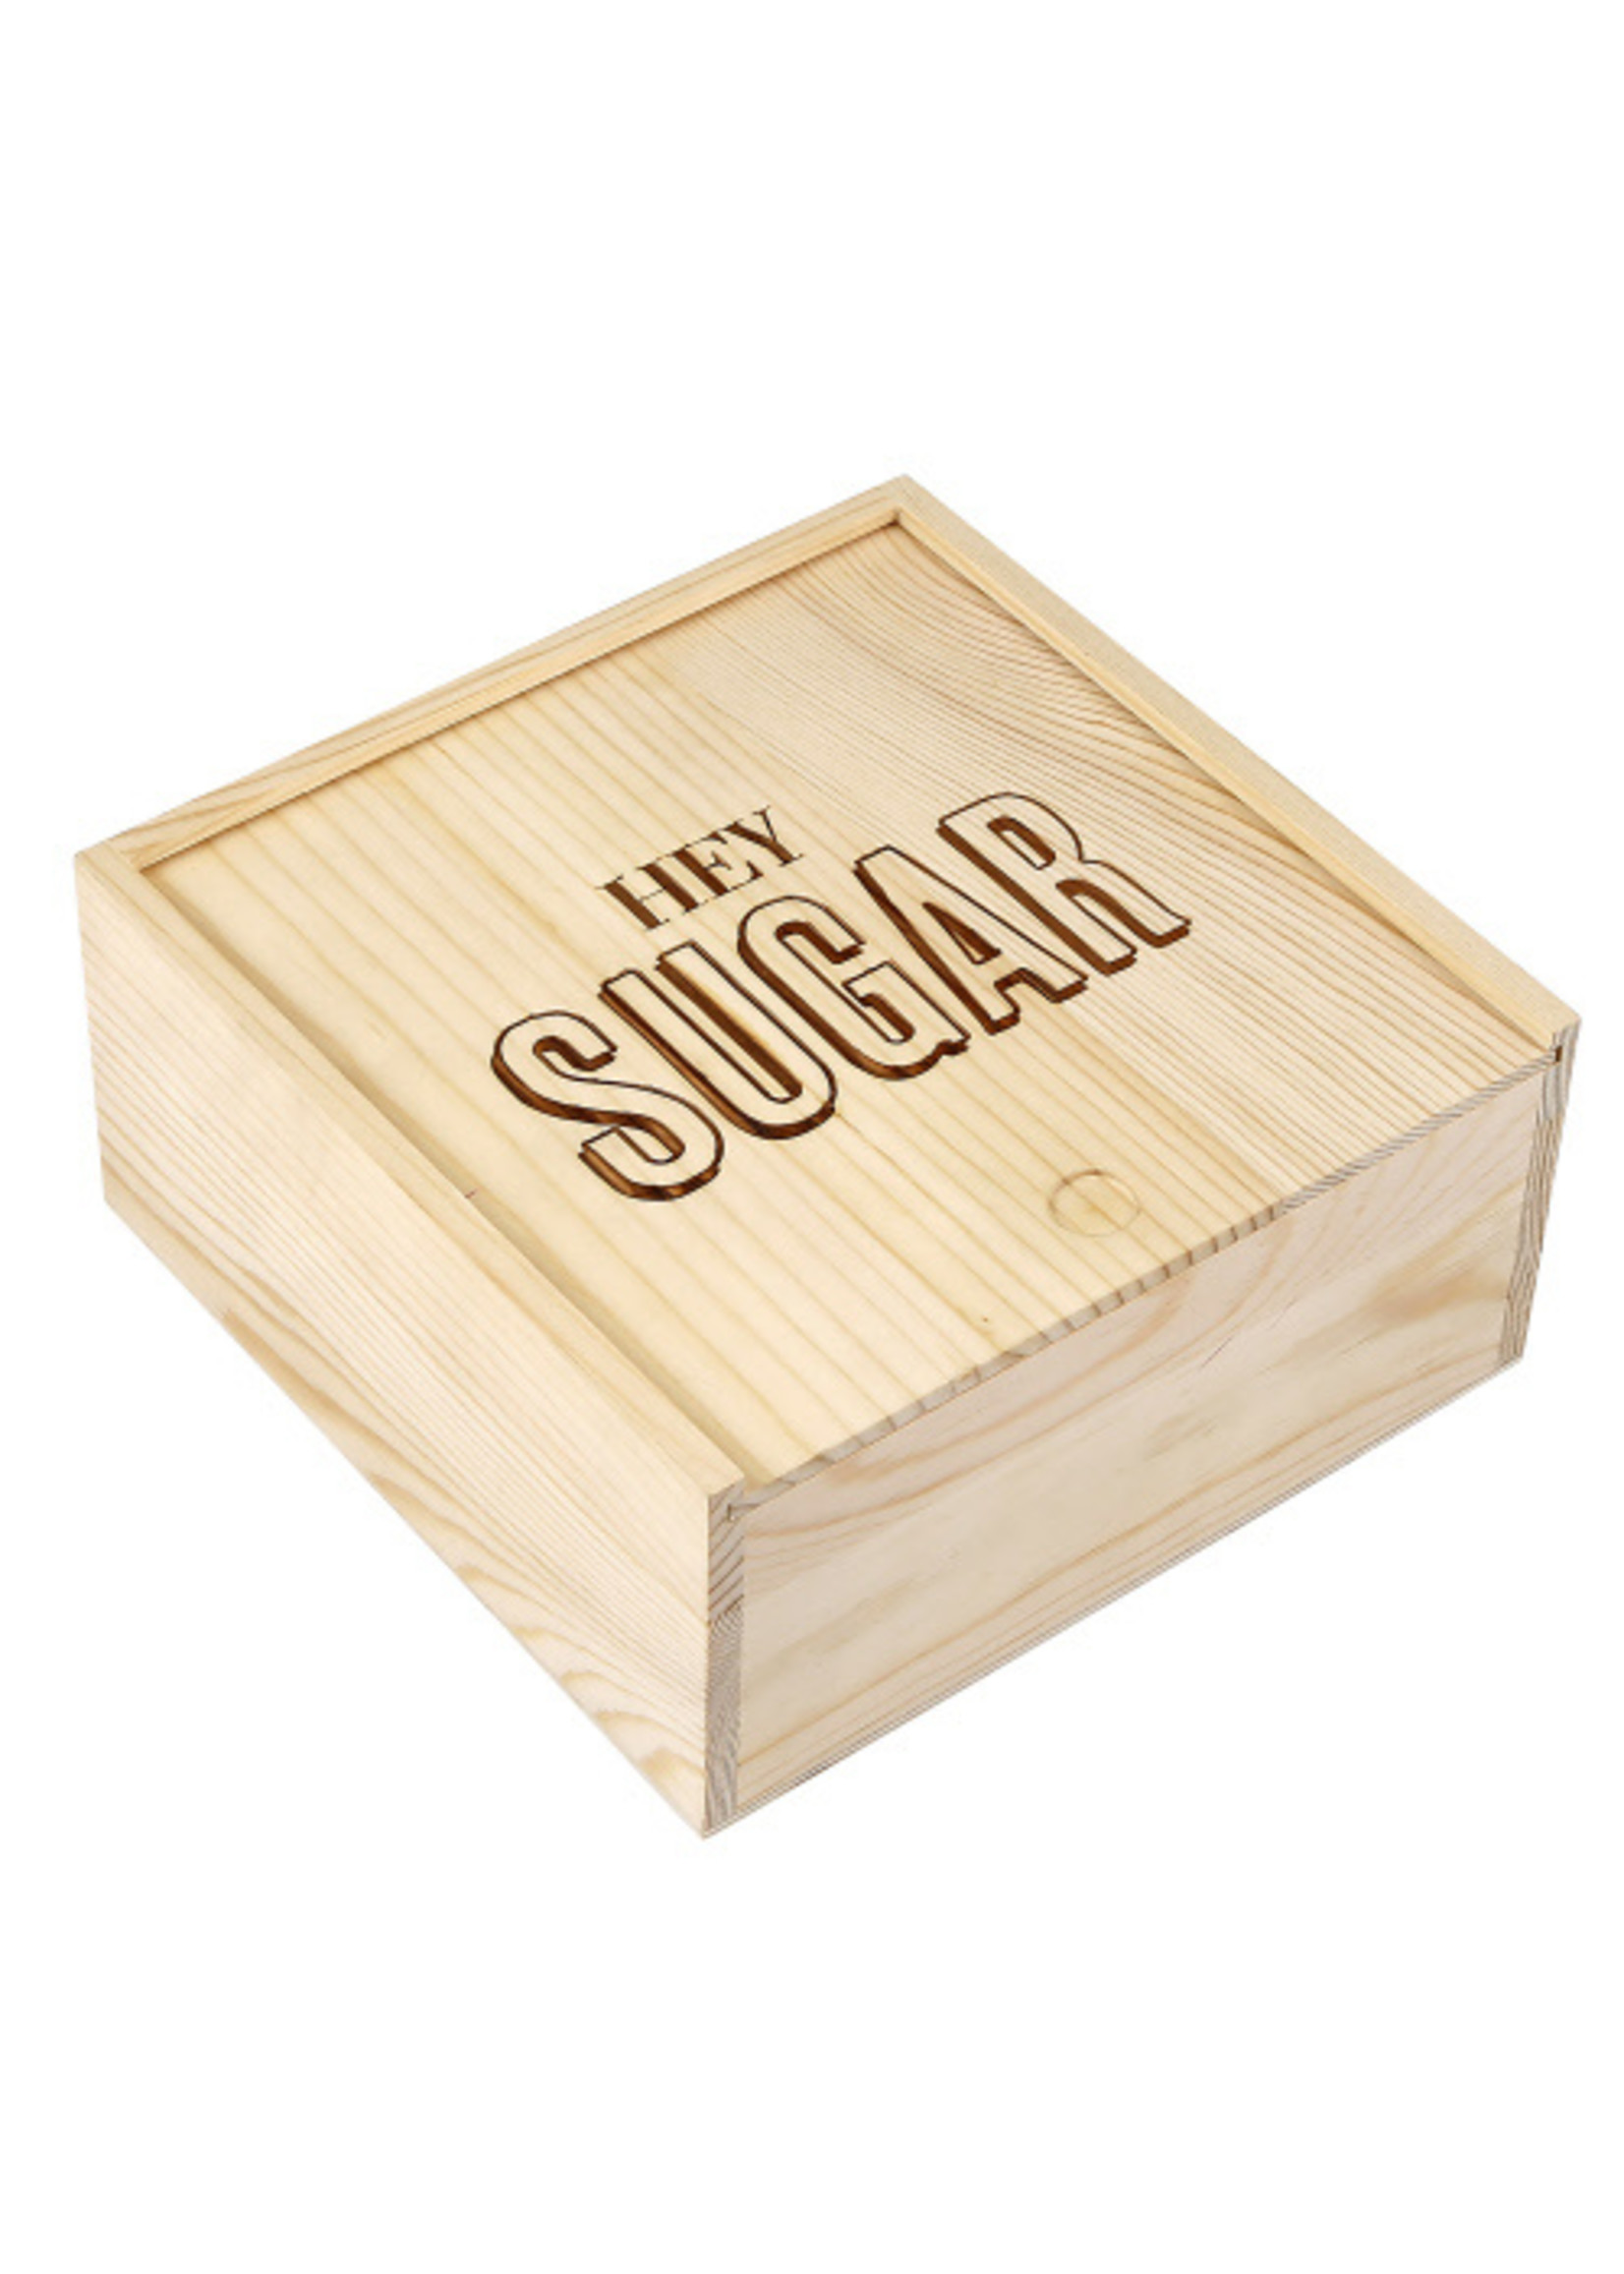 Creative Brands "Sugar" Sweets Box